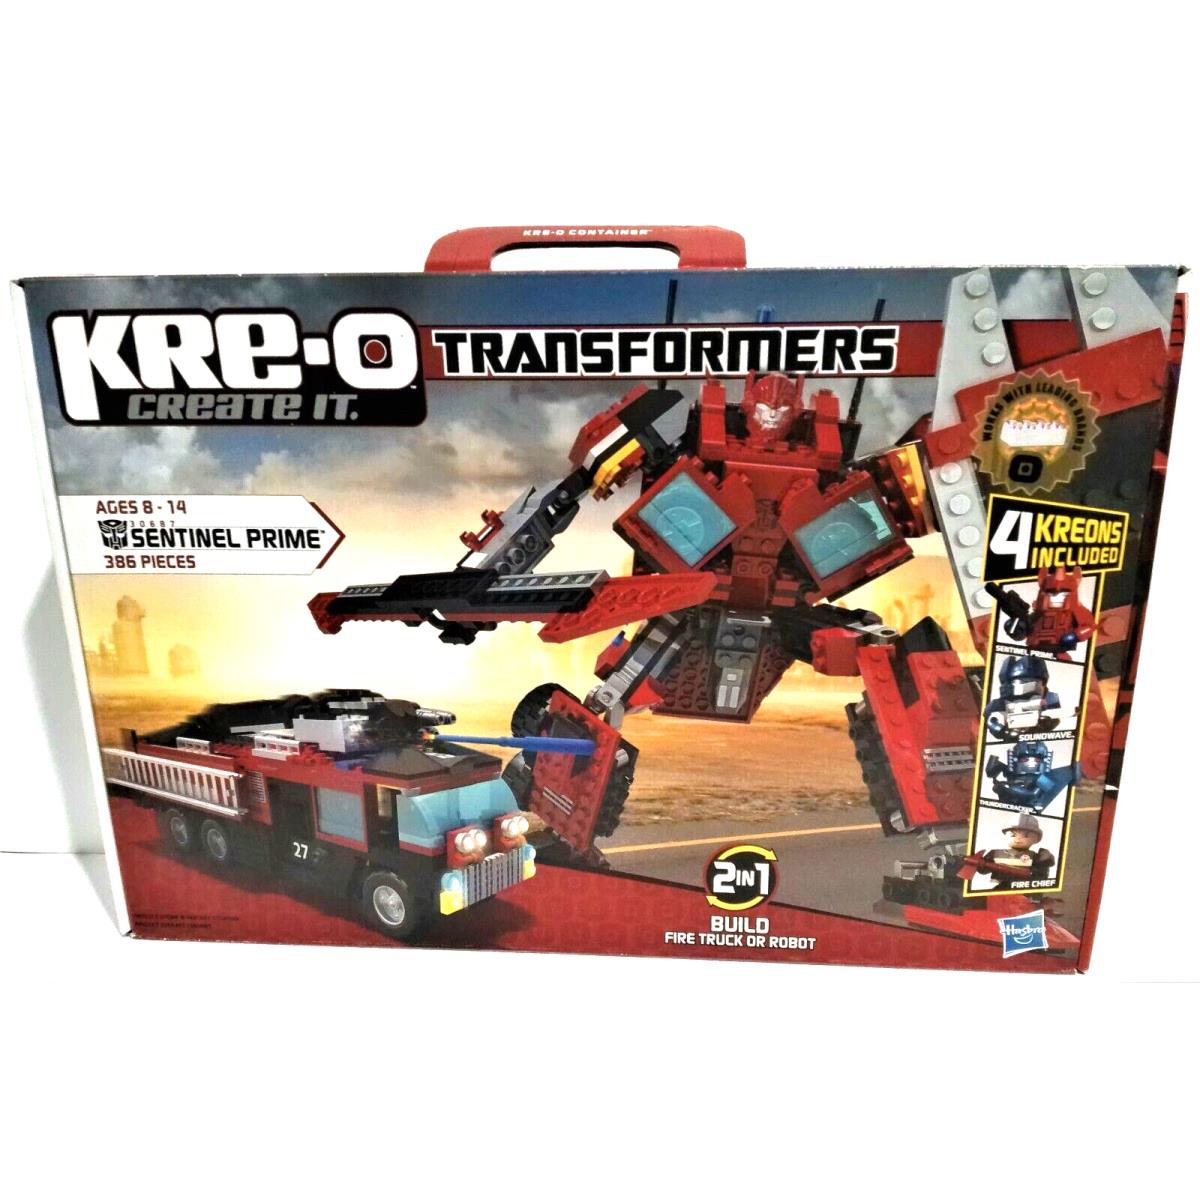 Hasbro Kre-o Create IT Transformers: 30687 Sentinel Prime Fire Truck/ Robot Misb